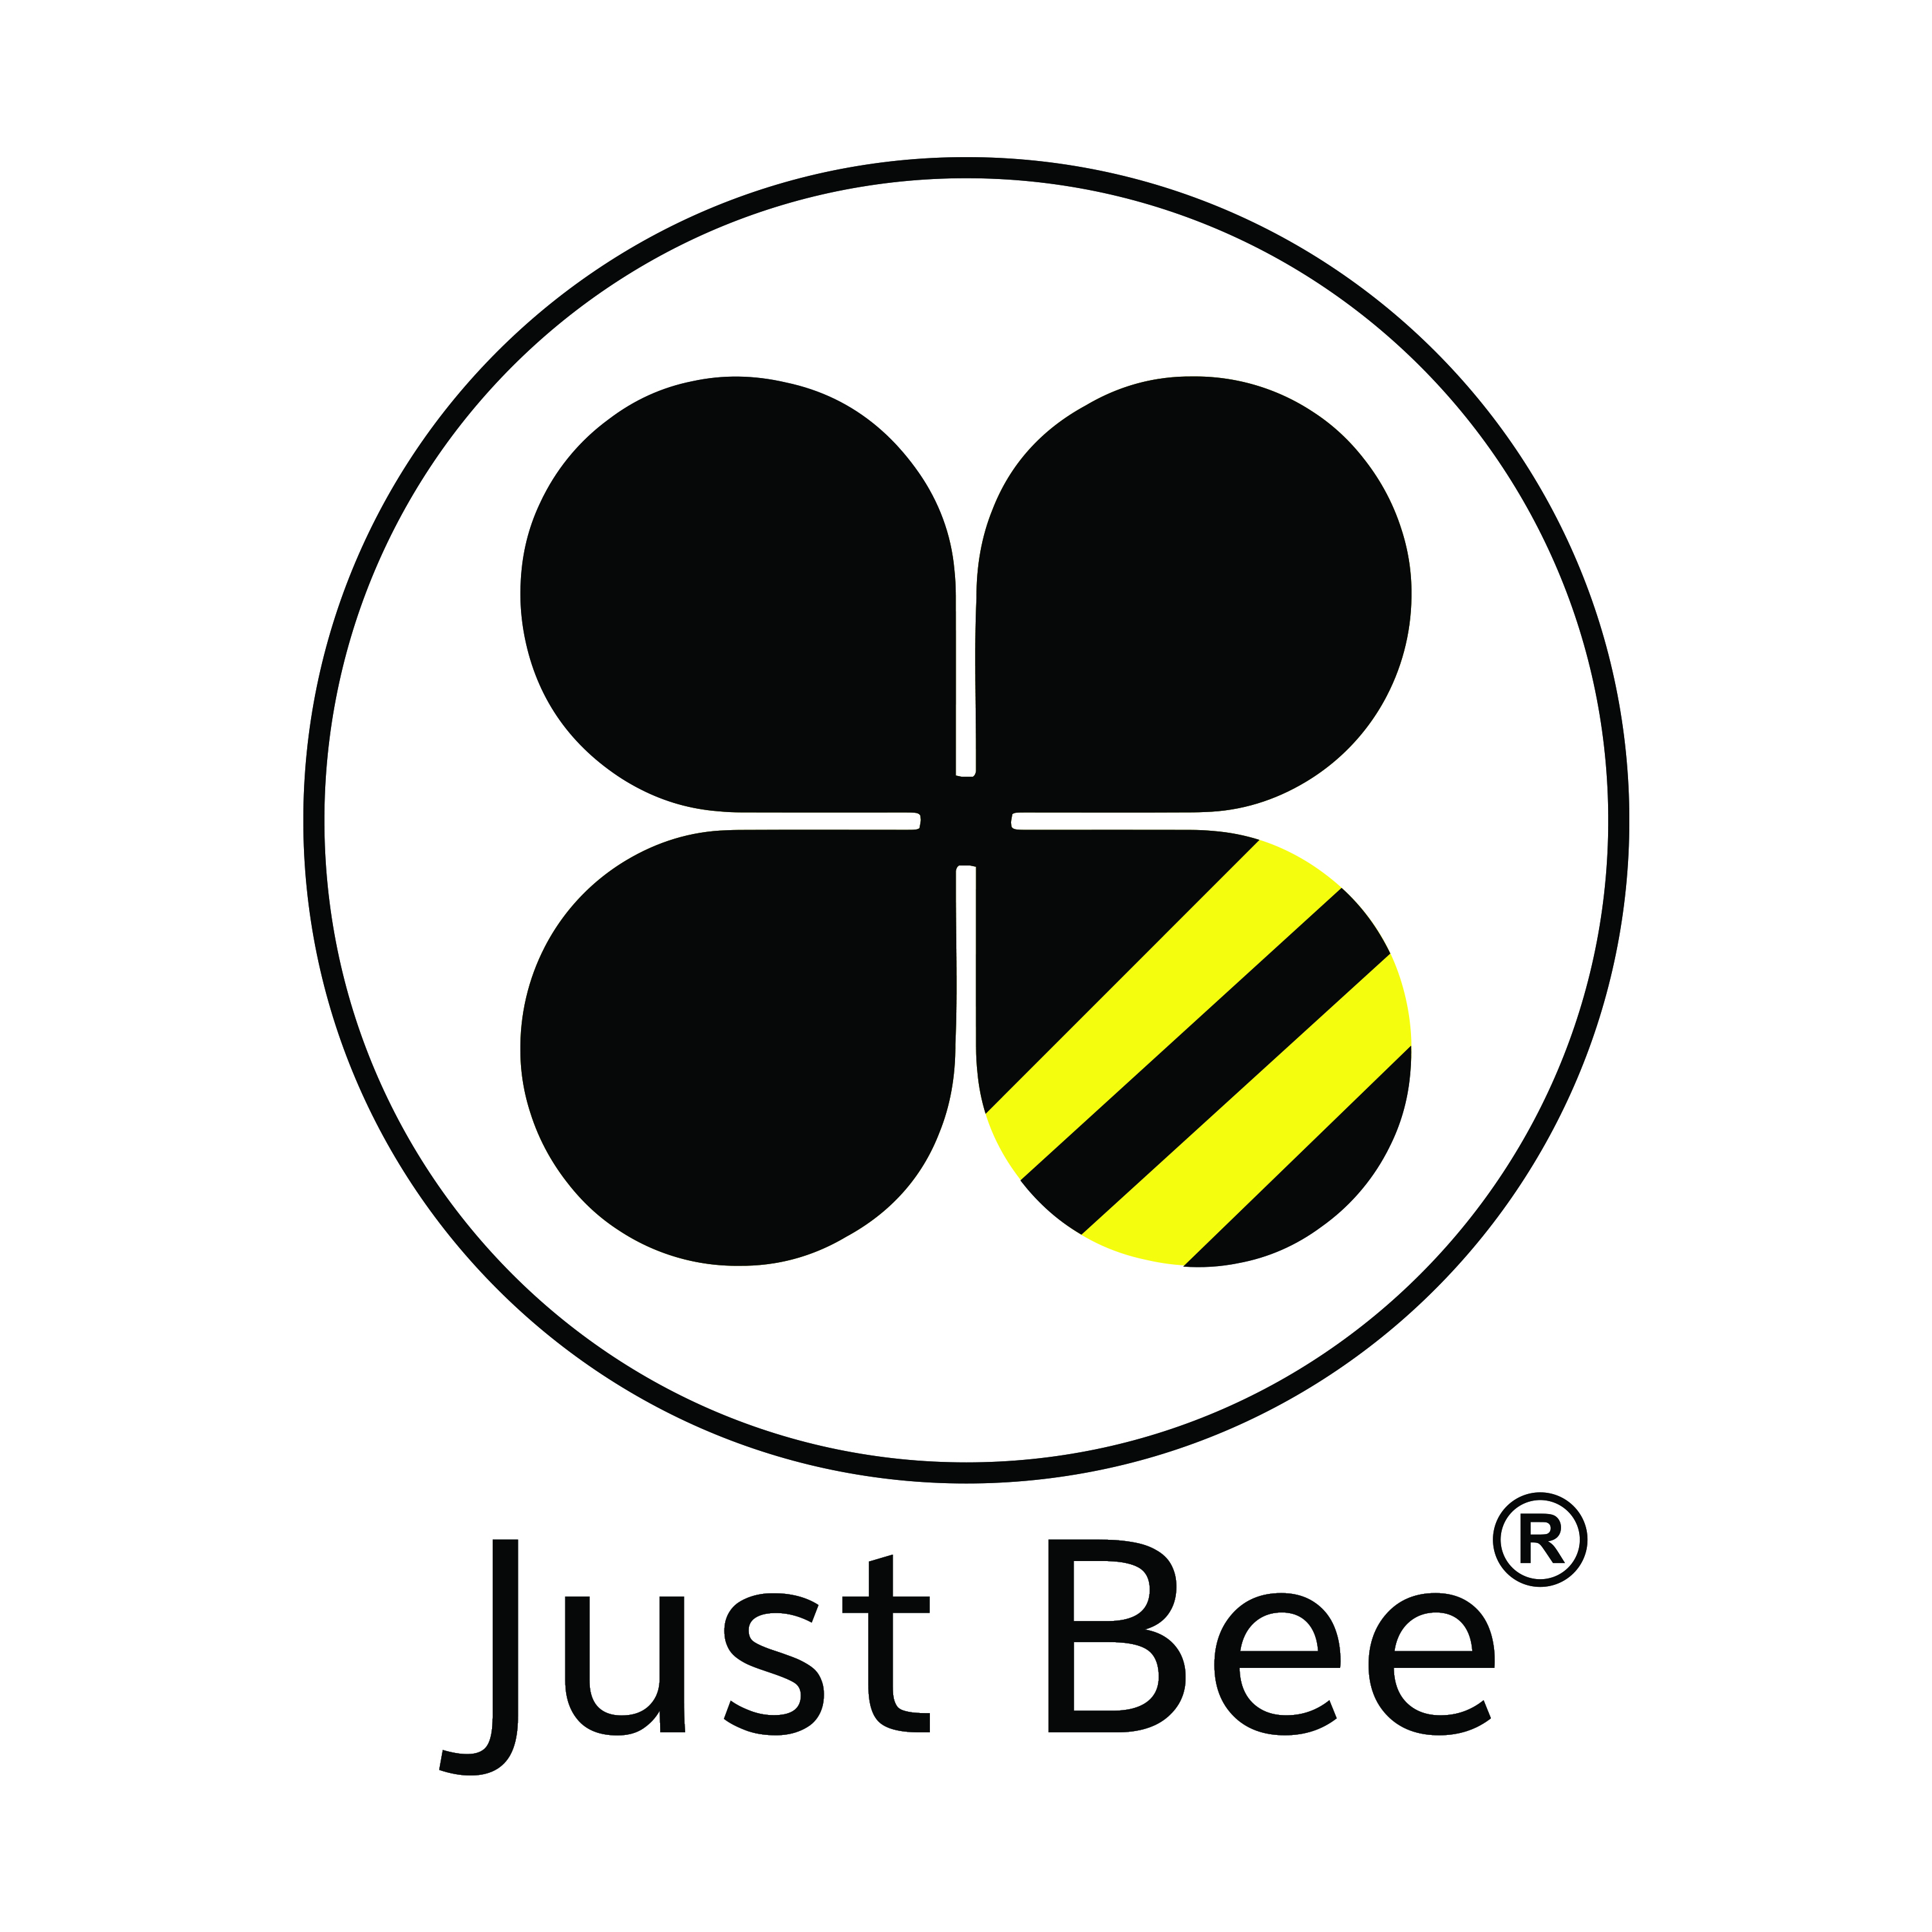 Just Bee logo